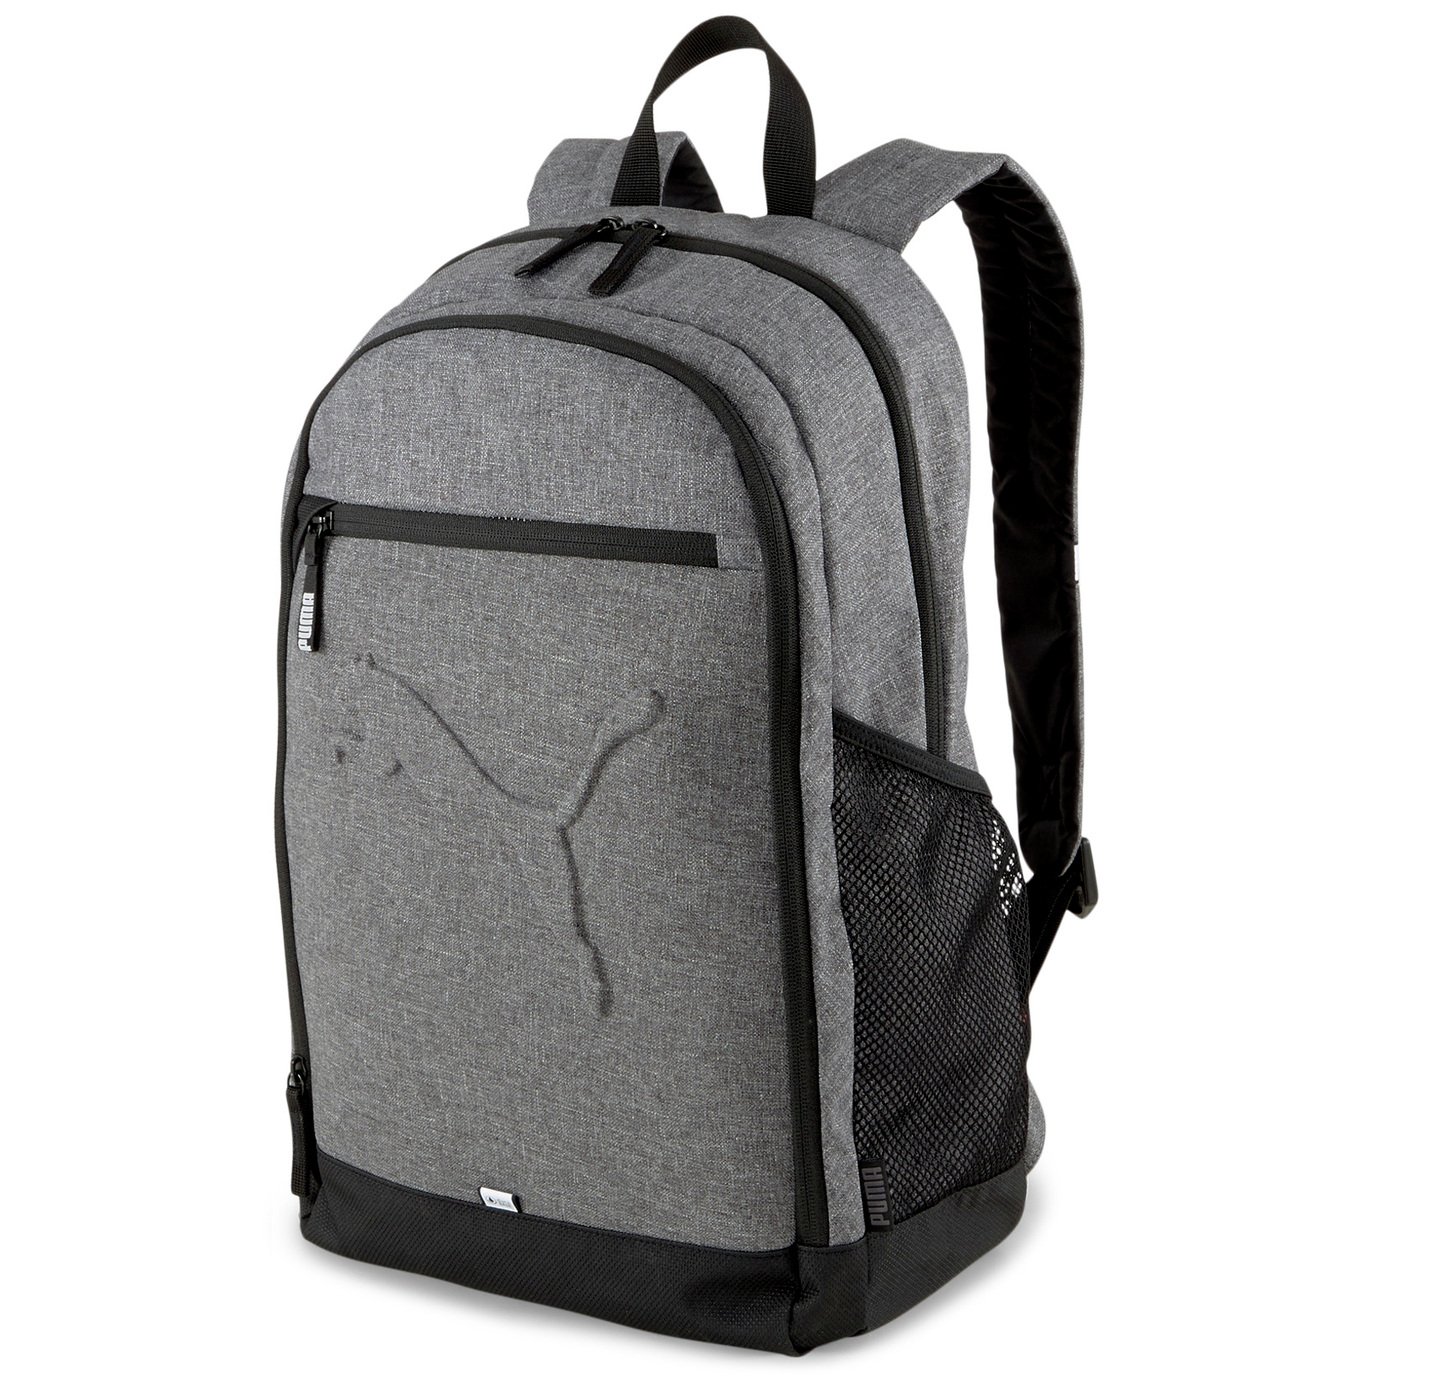 puma buzz backpack black